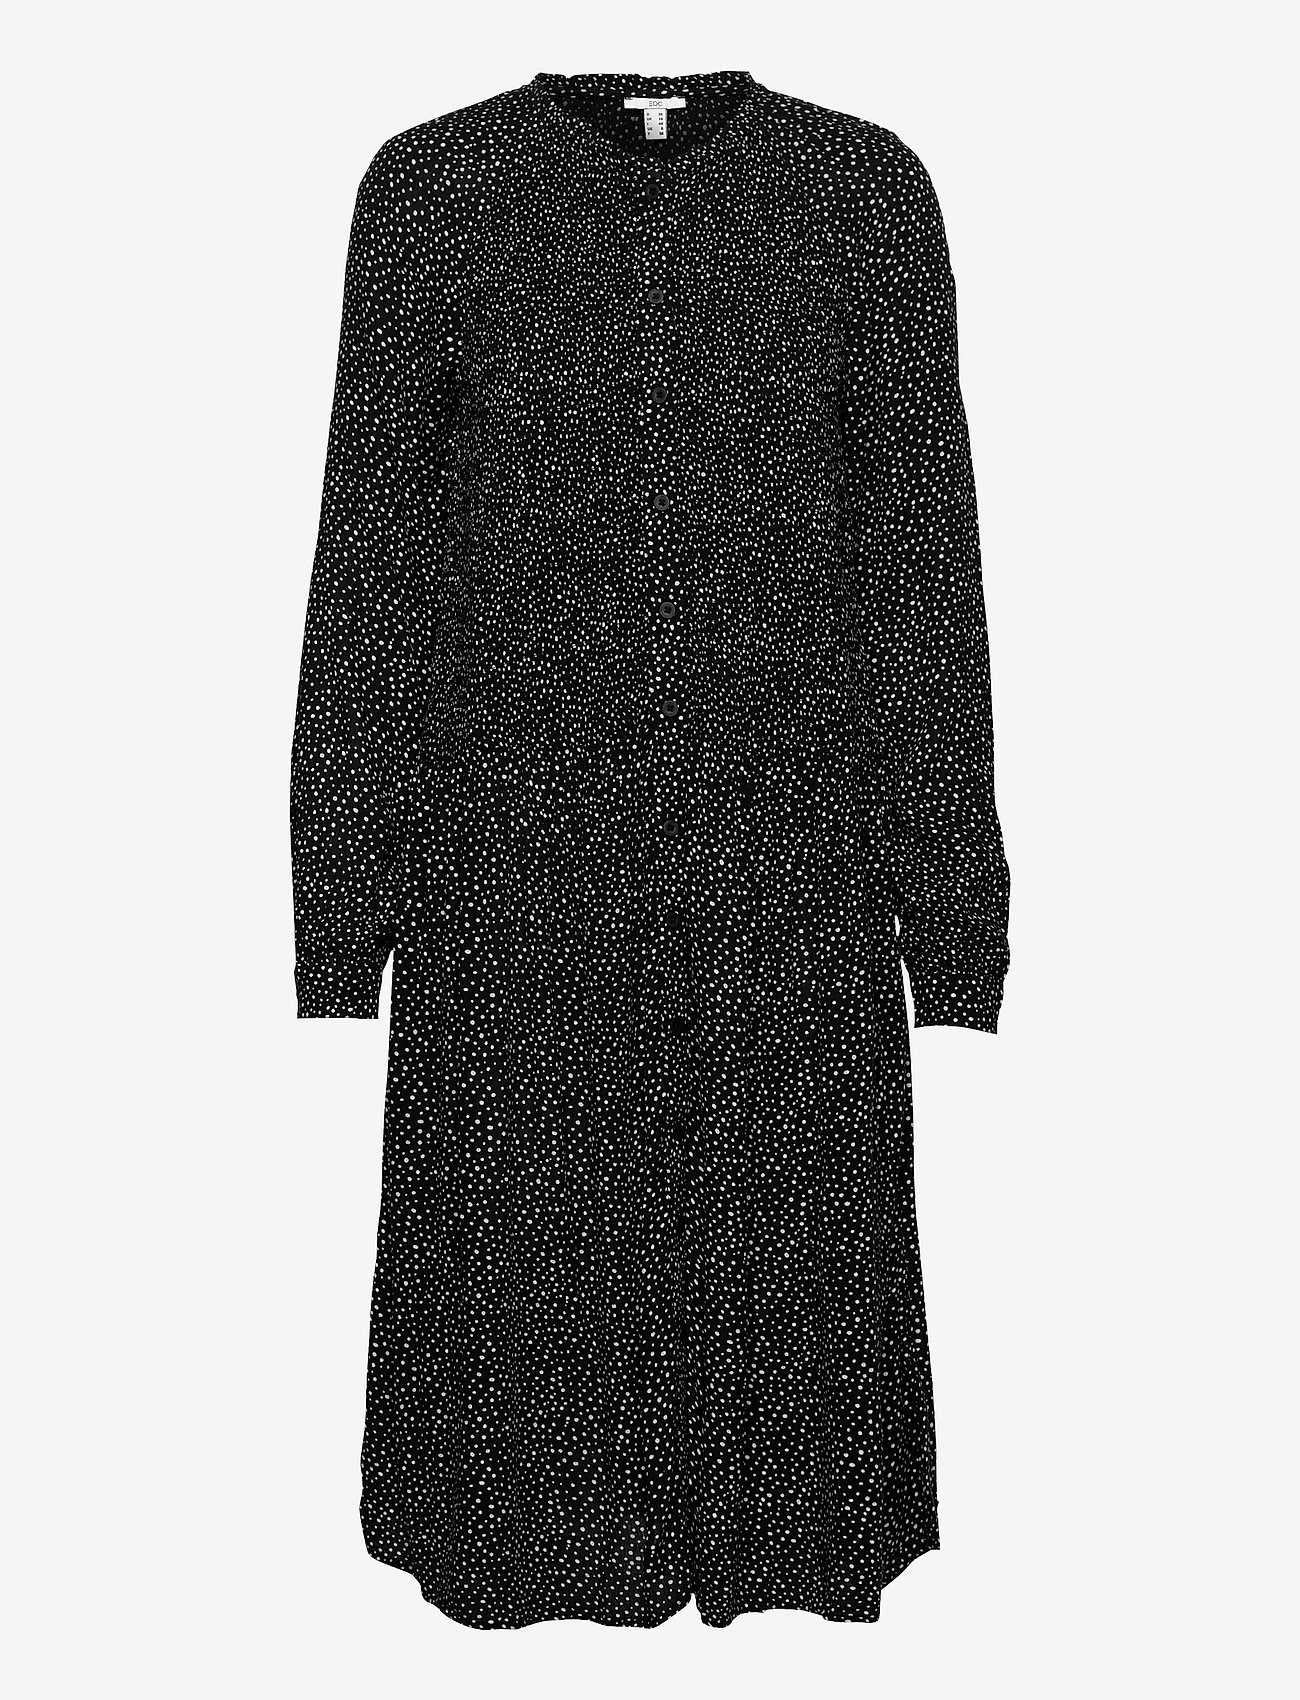 EDC by Esprit - Dresses light woven - midikleidid - black 3 - 0